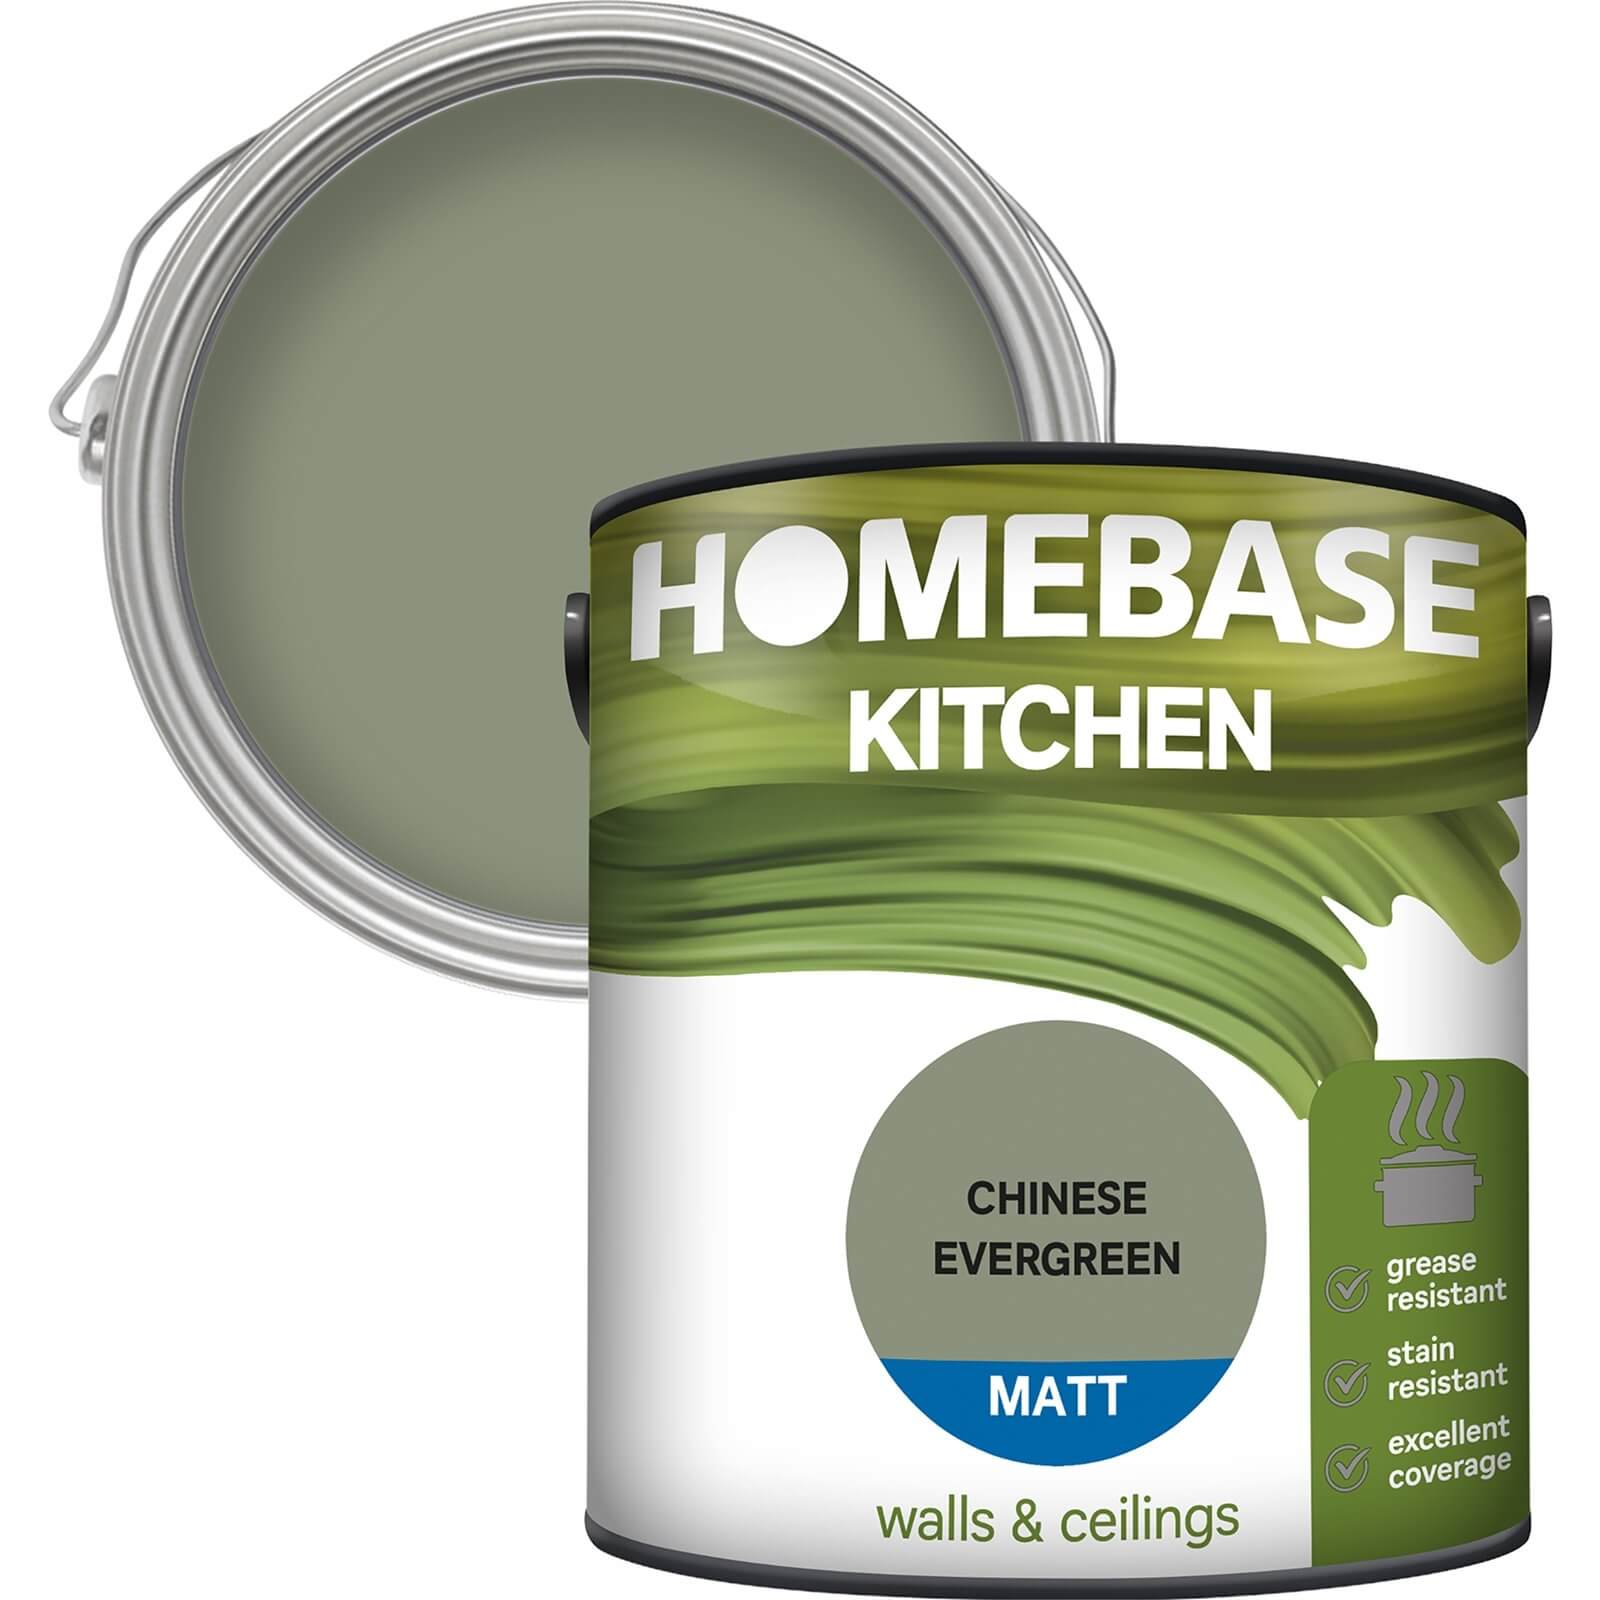 Homebase Kitchen Matt Paint - Chinese Evergreen 2.5L